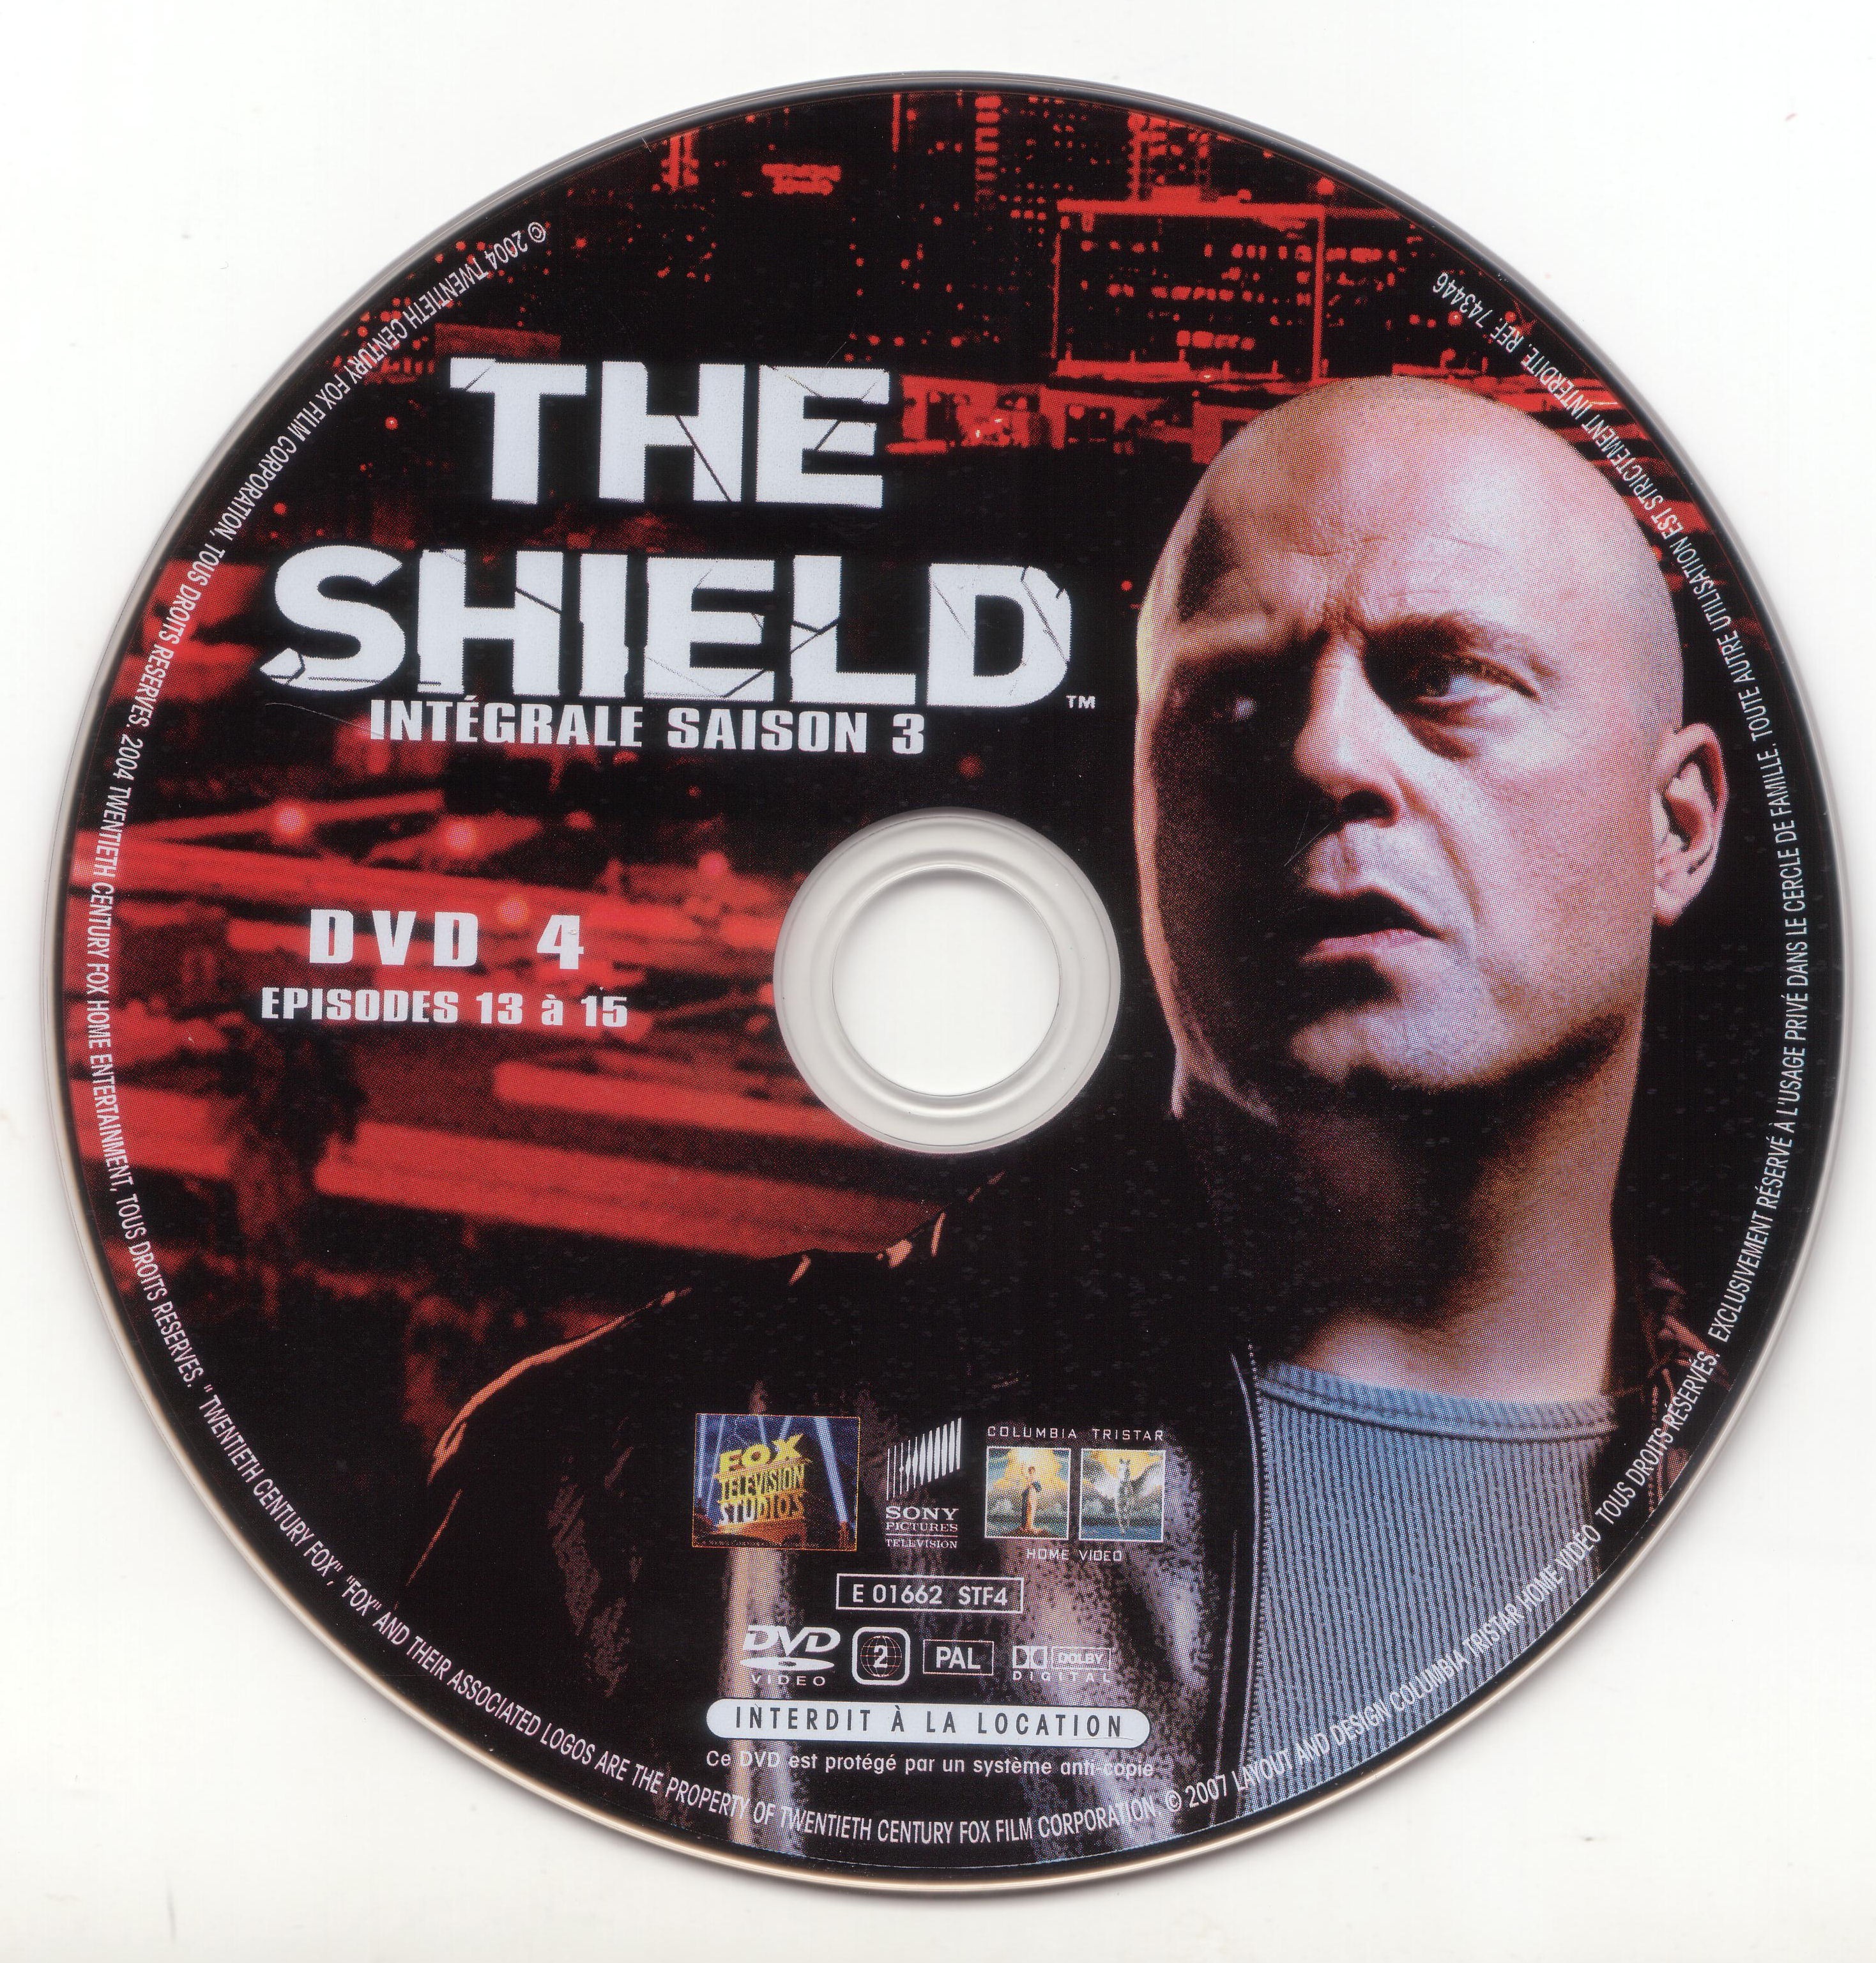 The shield Saison 3 DVD 4